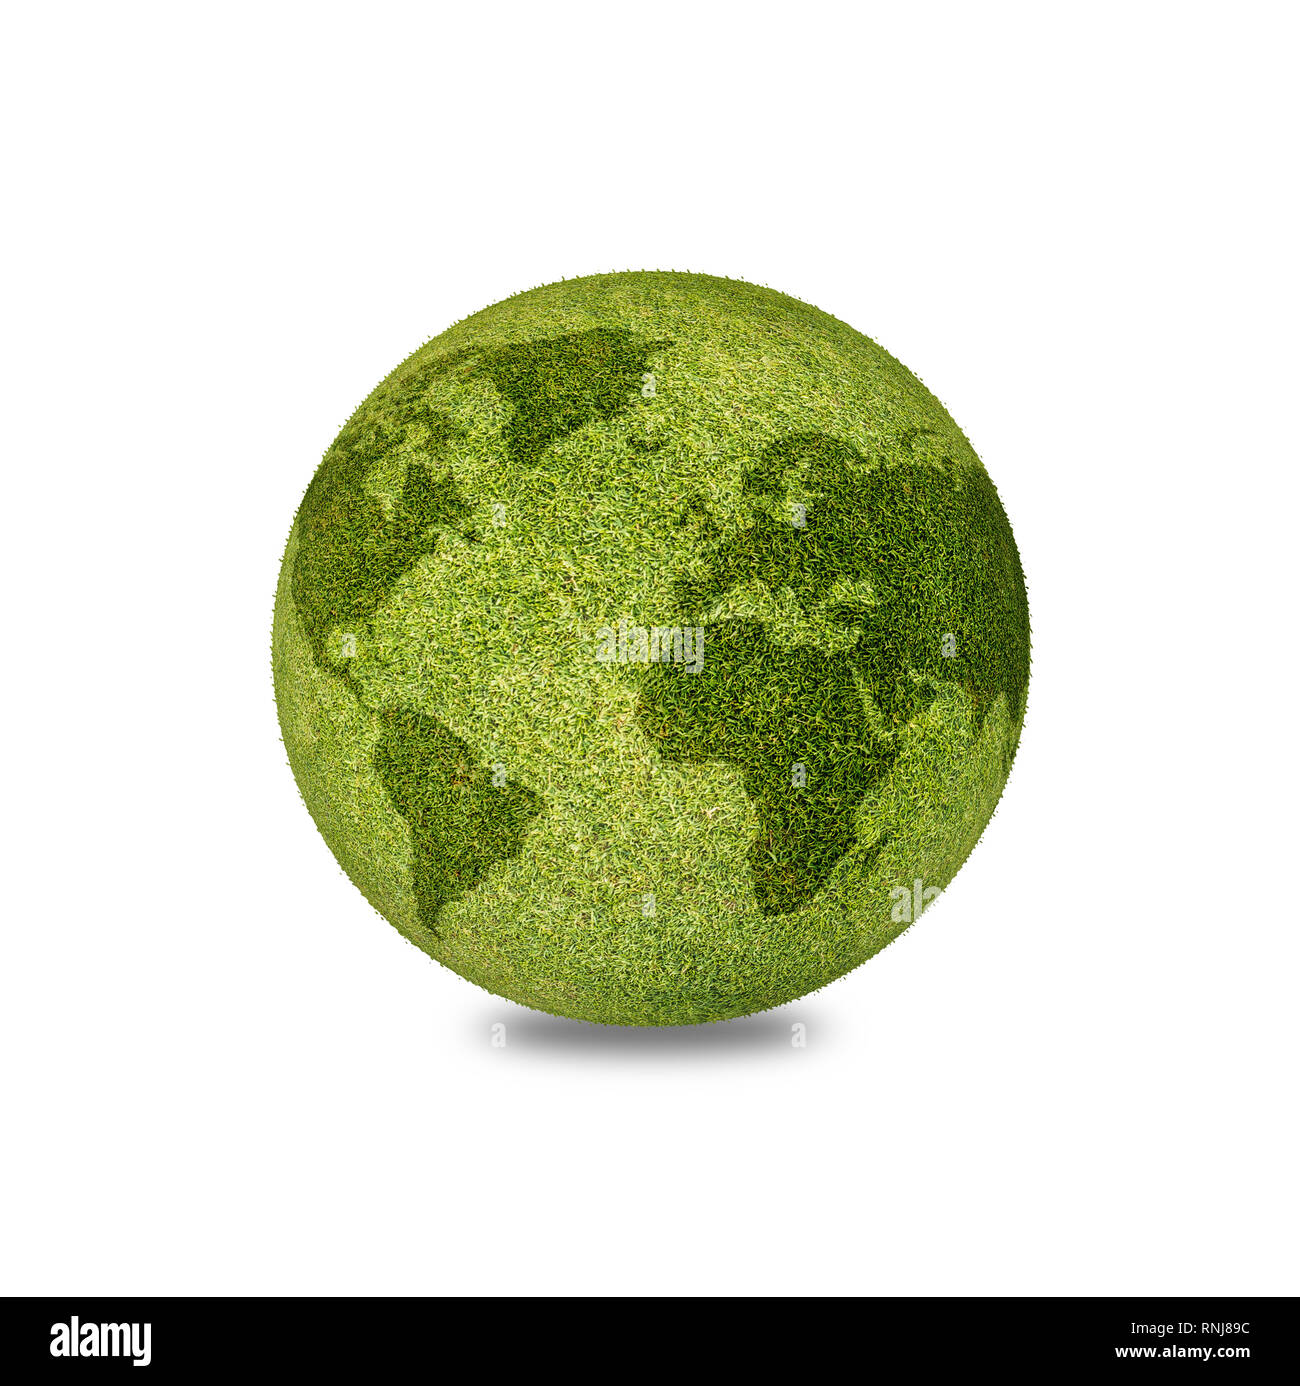 World globe forme d'herbe verte isolée sur fond blanc Banque D'Images